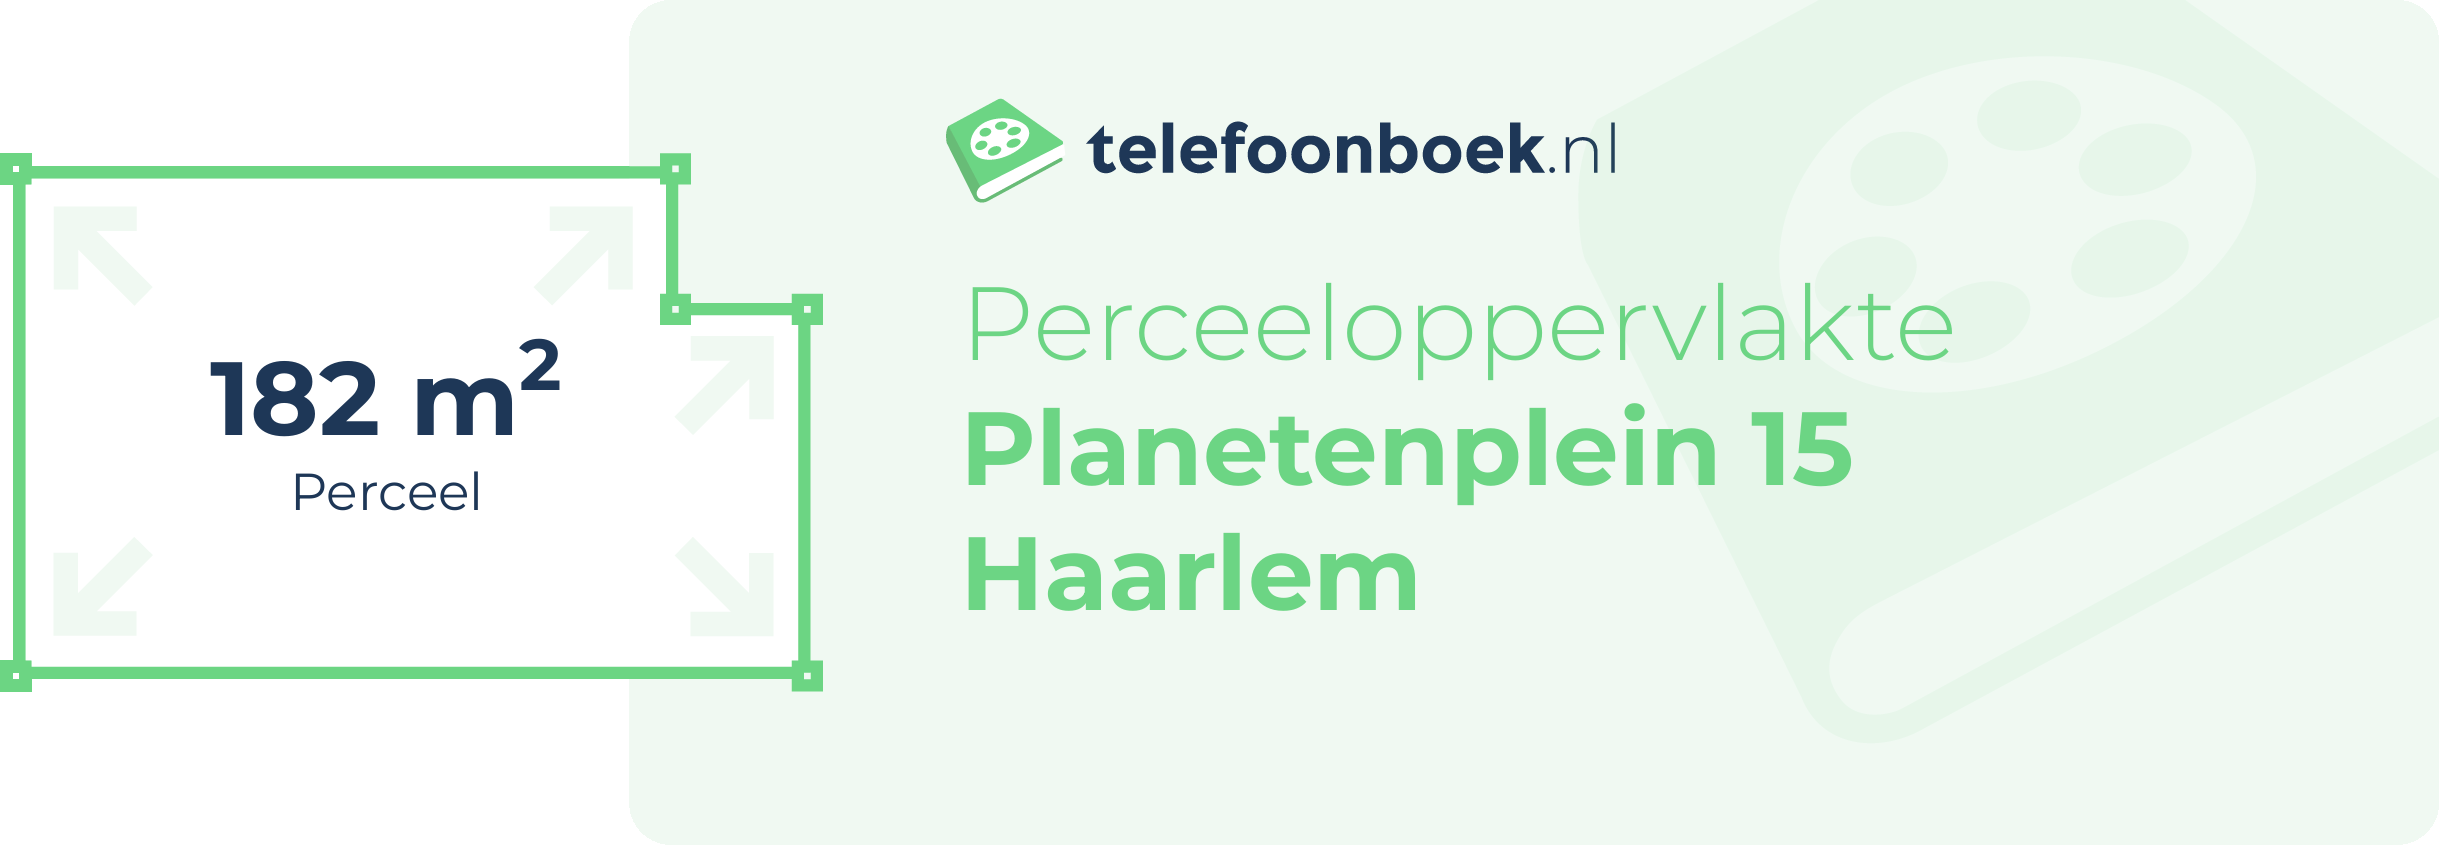 Perceeloppervlakte Planetenplein 15 Haarlem